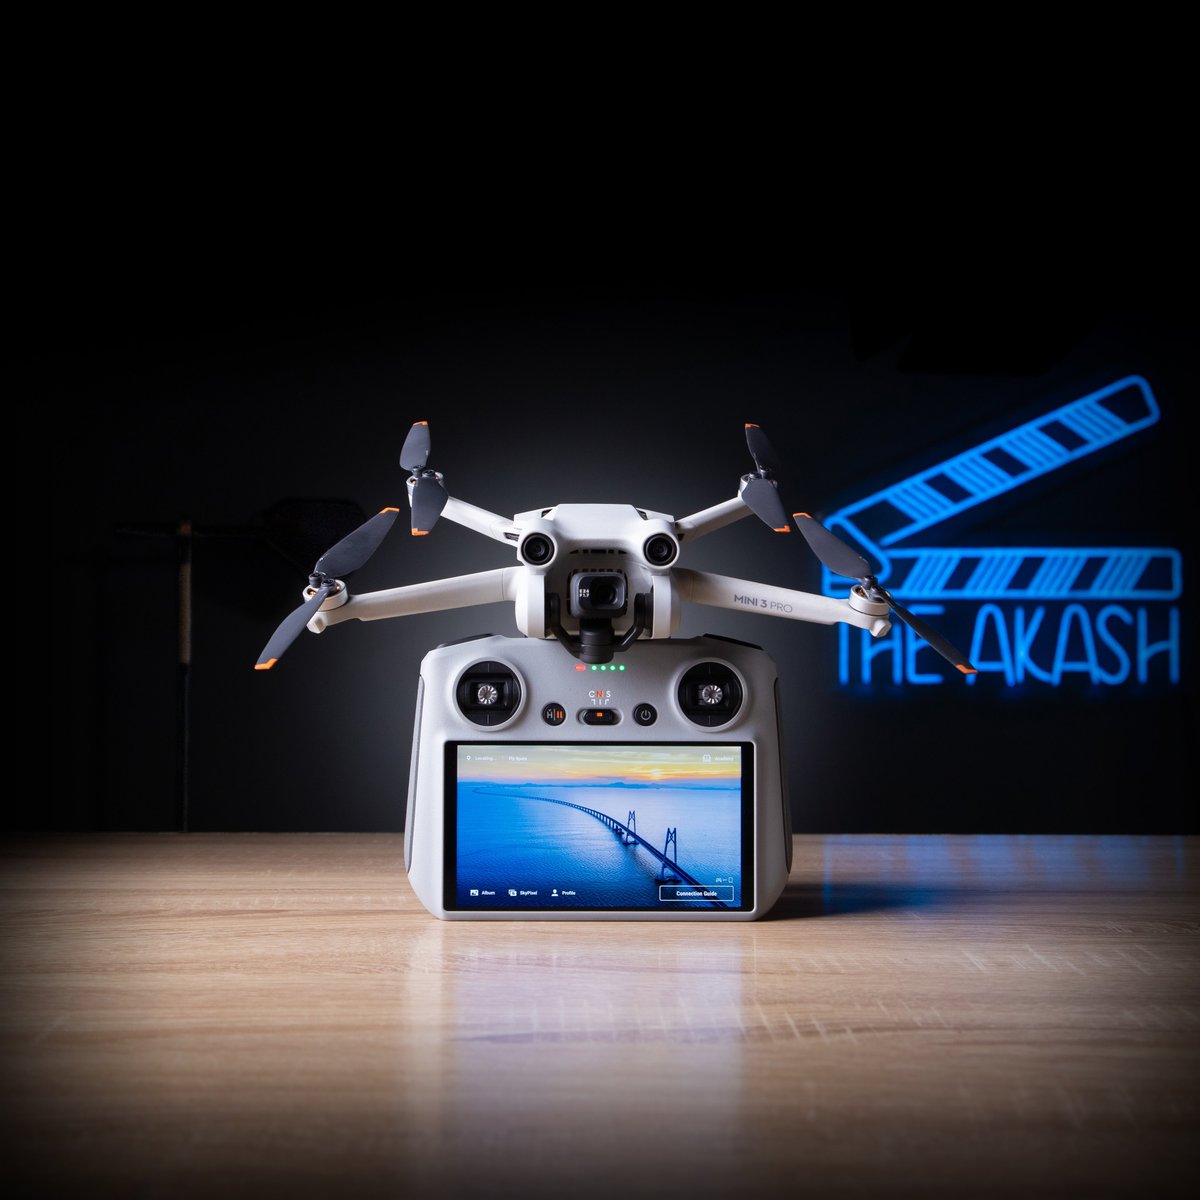 My Everyday Drone - DJI Mini 3 Pro

#dronephotography #aerialshot #drone #DJIMavic3Classic #ExploreVivid #DJIInspire3 #DJI #CinemaDrone #DJIAvata #DJIMini3 #DJIMini3Pro